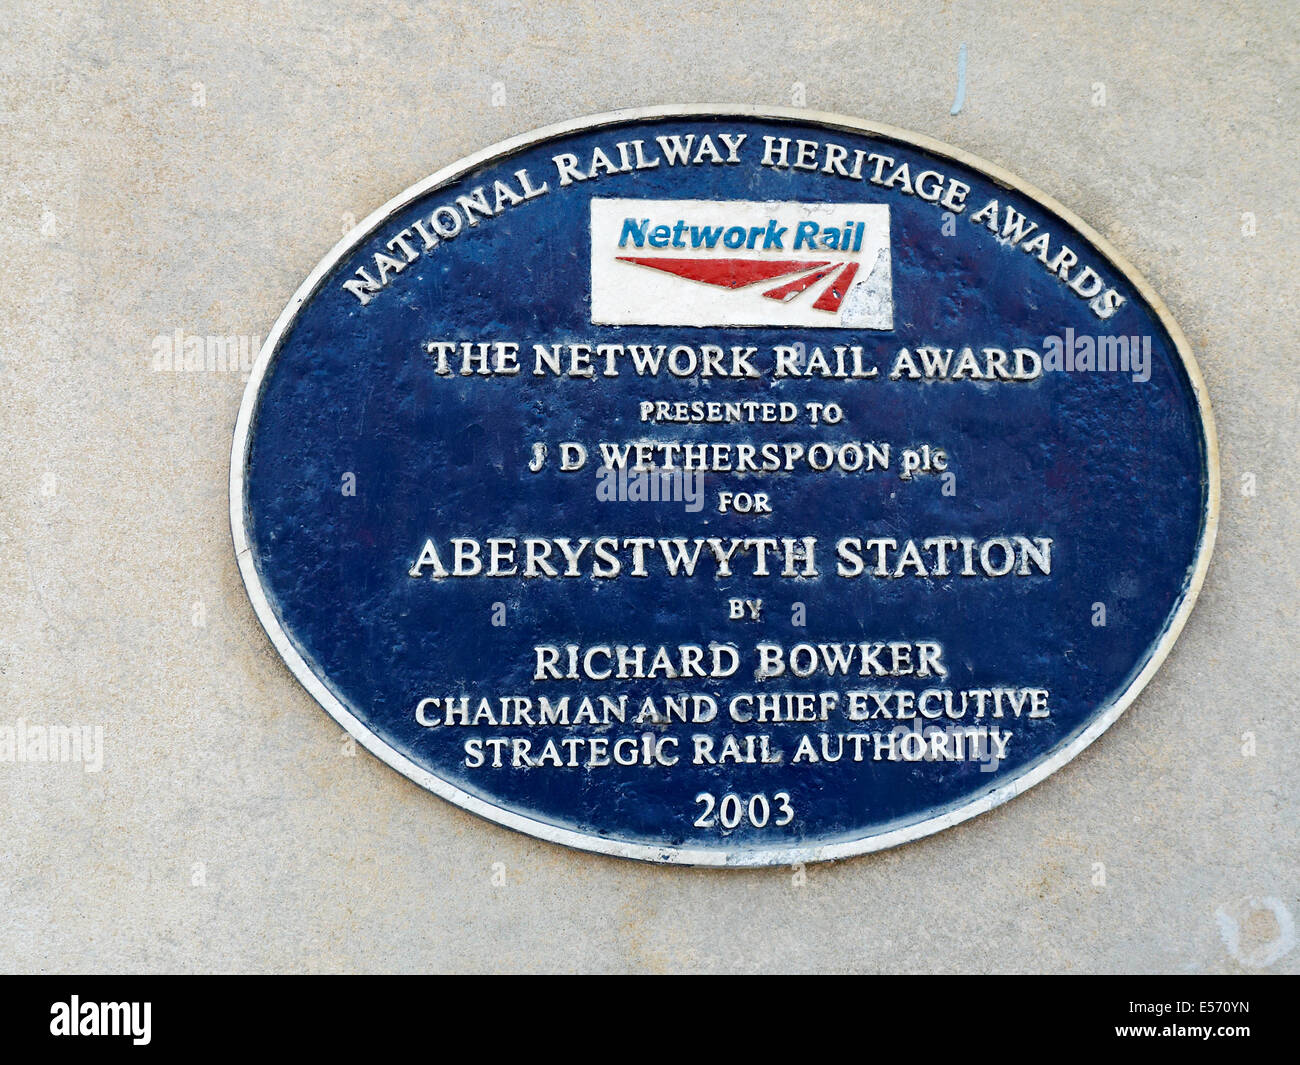 National Railway Heritage Awards placca alla stazione ferroviaria in Aberythwyth presentato al J D WETHERSPOON Wales UK Foto Stock